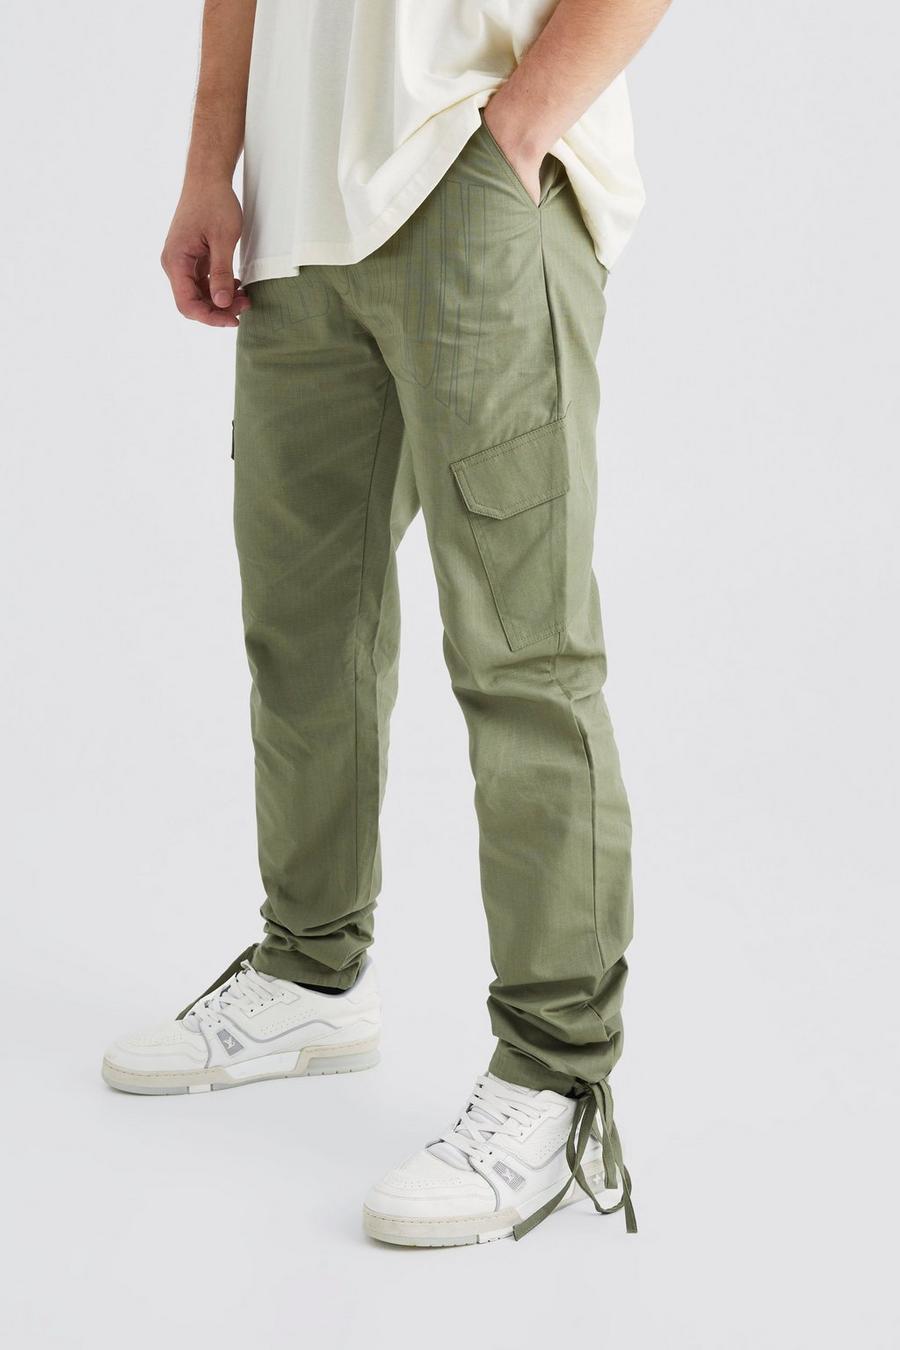 Pantaloni Cargo Tall Slim Fit in nylon ripstop tono su tono, Khaki caqui